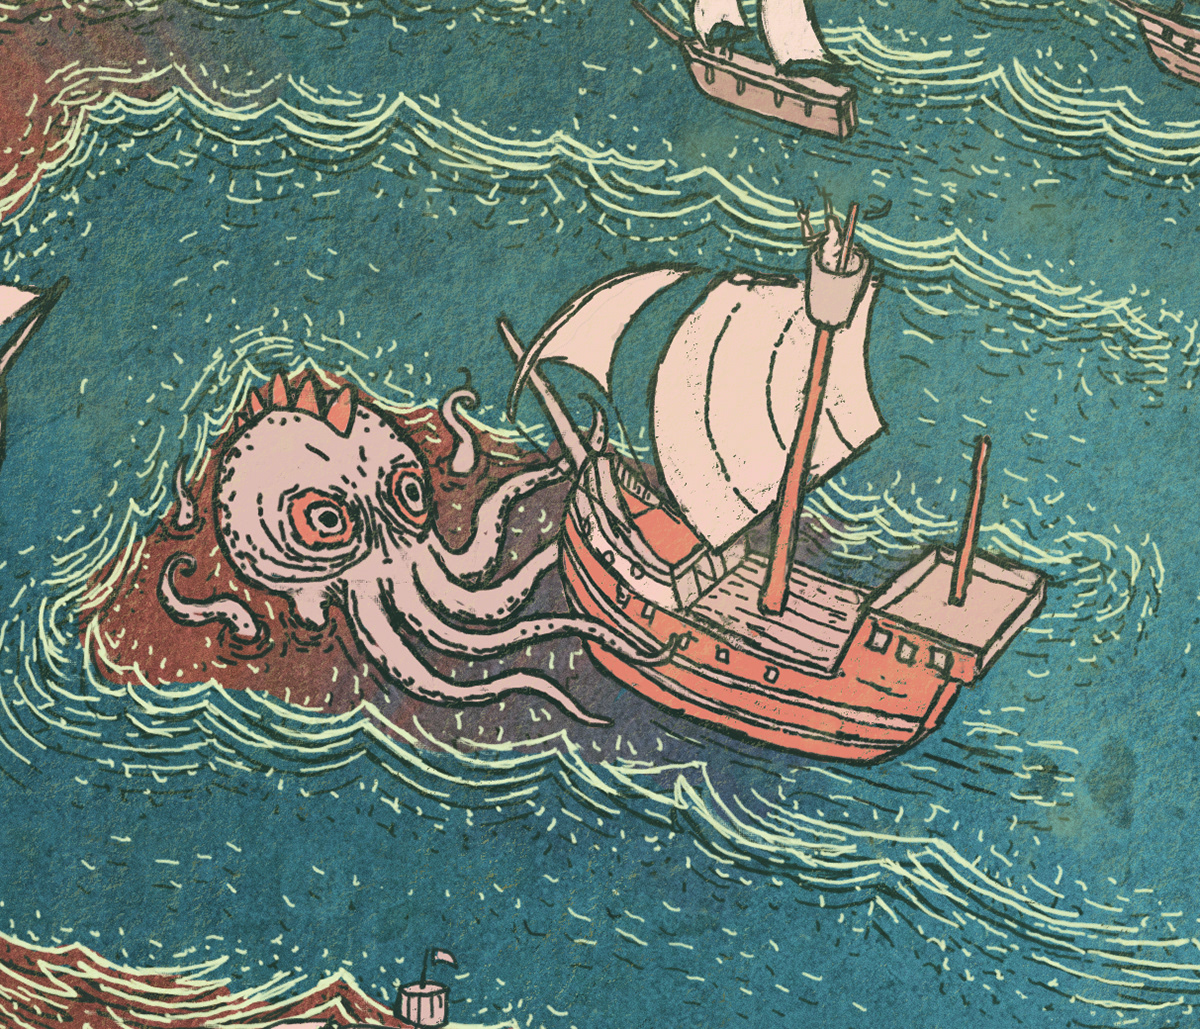 maze captain art compass Stock market sea monster ship sailboat lost at sea editorial finance financial economics economy